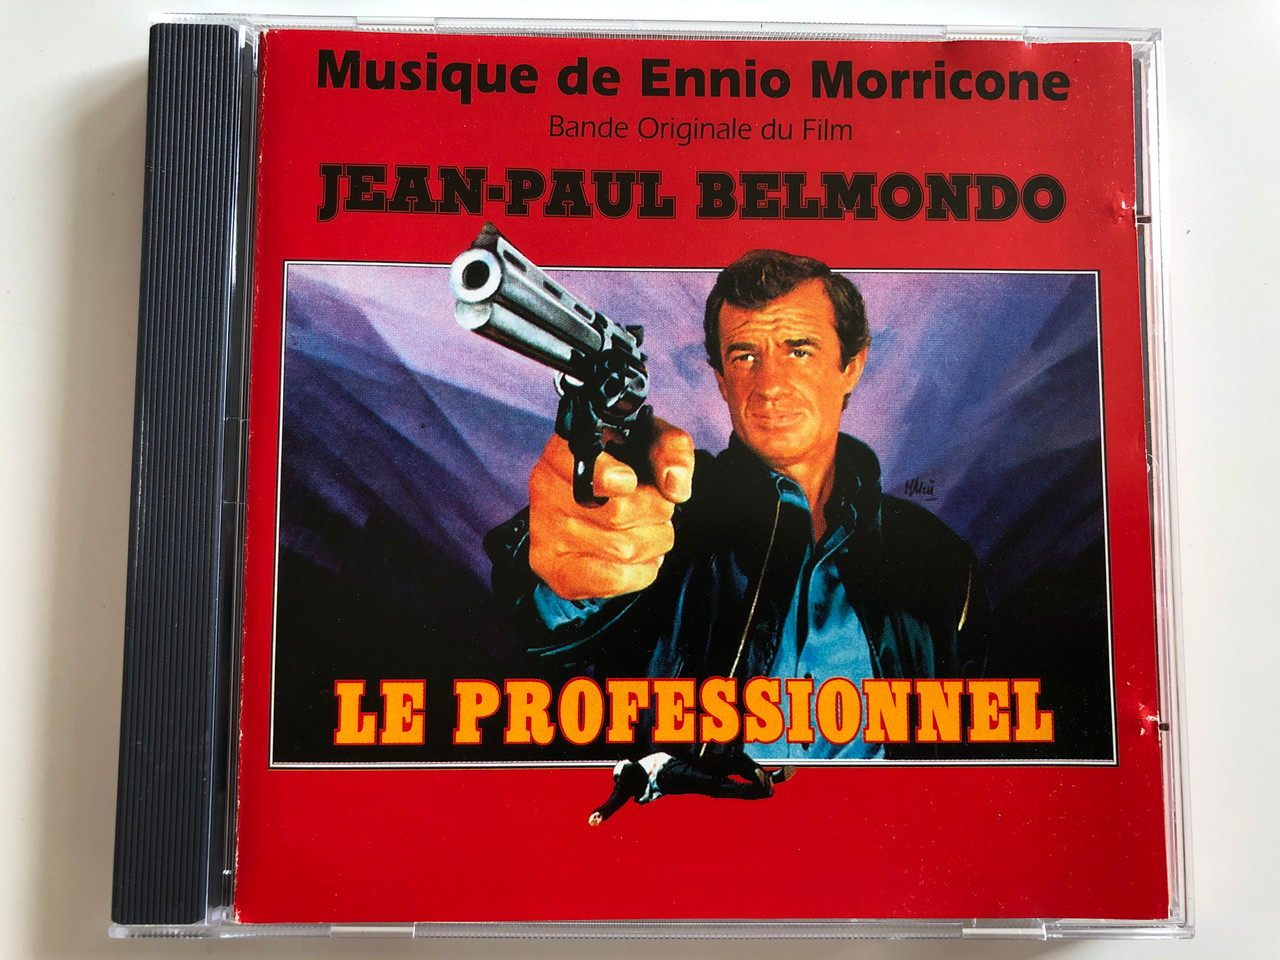 Musique de Ennio Morricone ‎– Bande Originale Du Film Jean-Paul Belmondo -  Le Professionnel / E. Z. S. Music Audio CD 1997 / 97042 E. Z. S. -  bibleinmylanguage